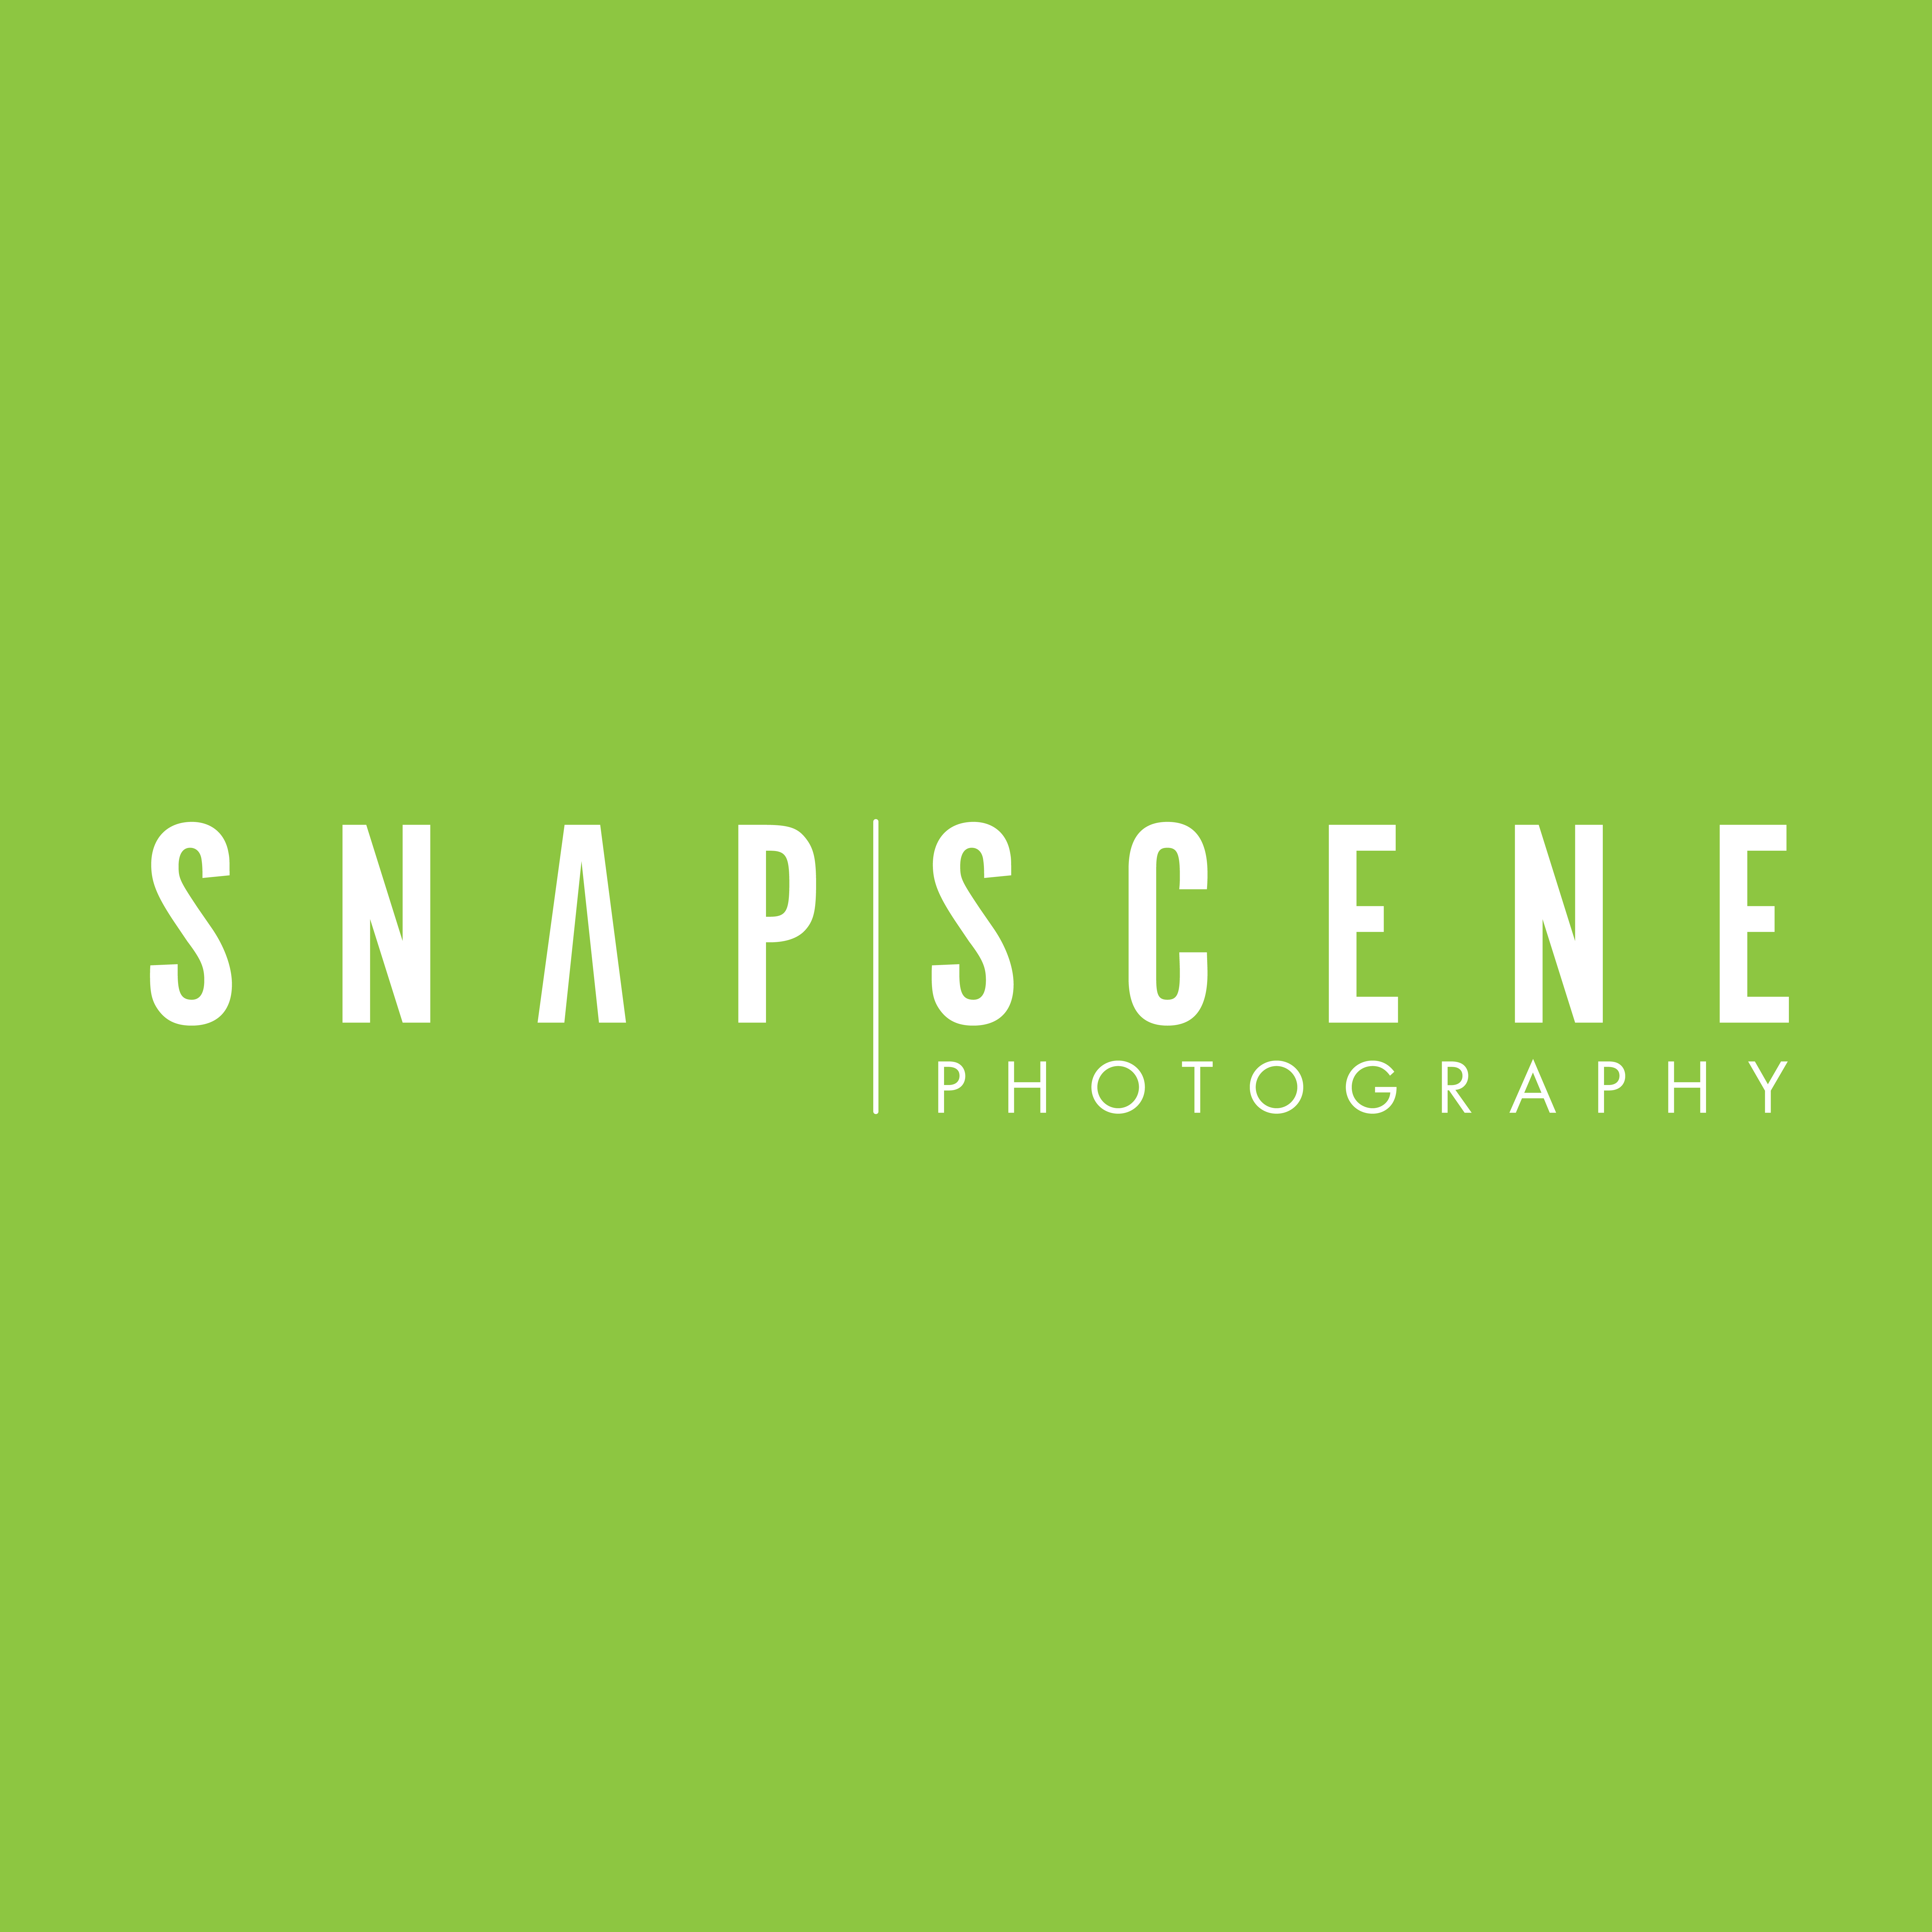 Snapscene Photography